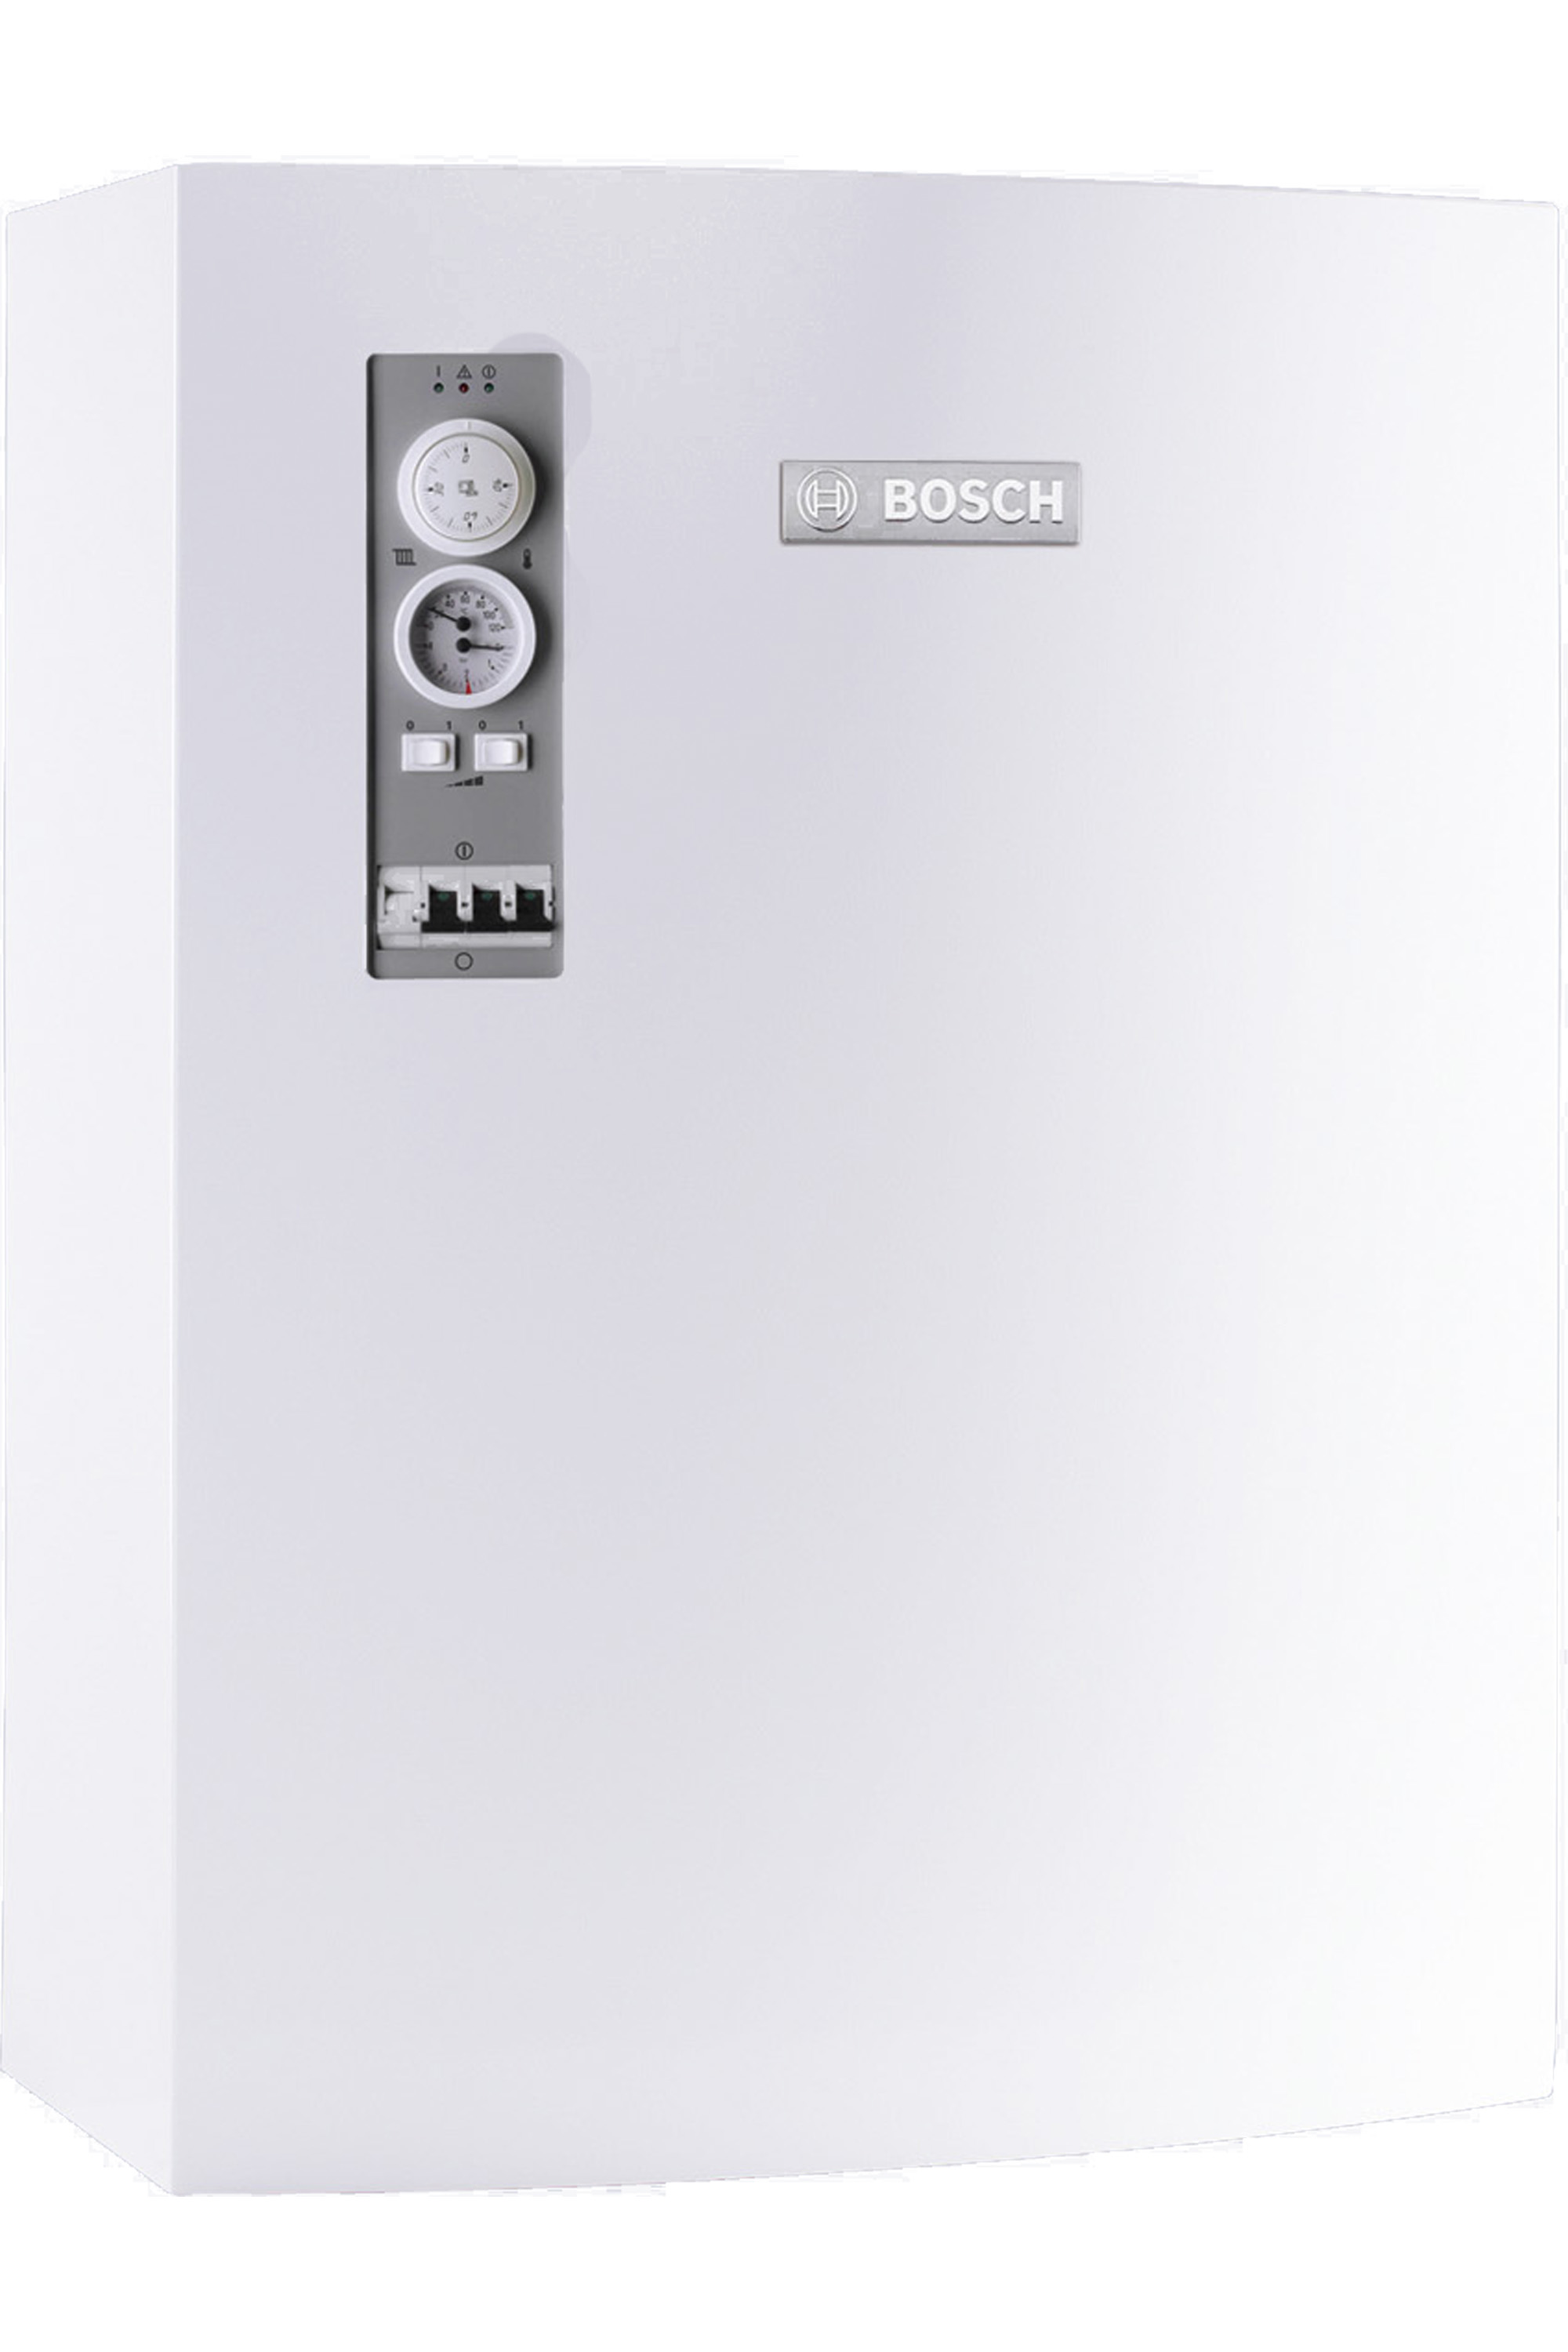 Bosch Tronic 5000 H 30kW